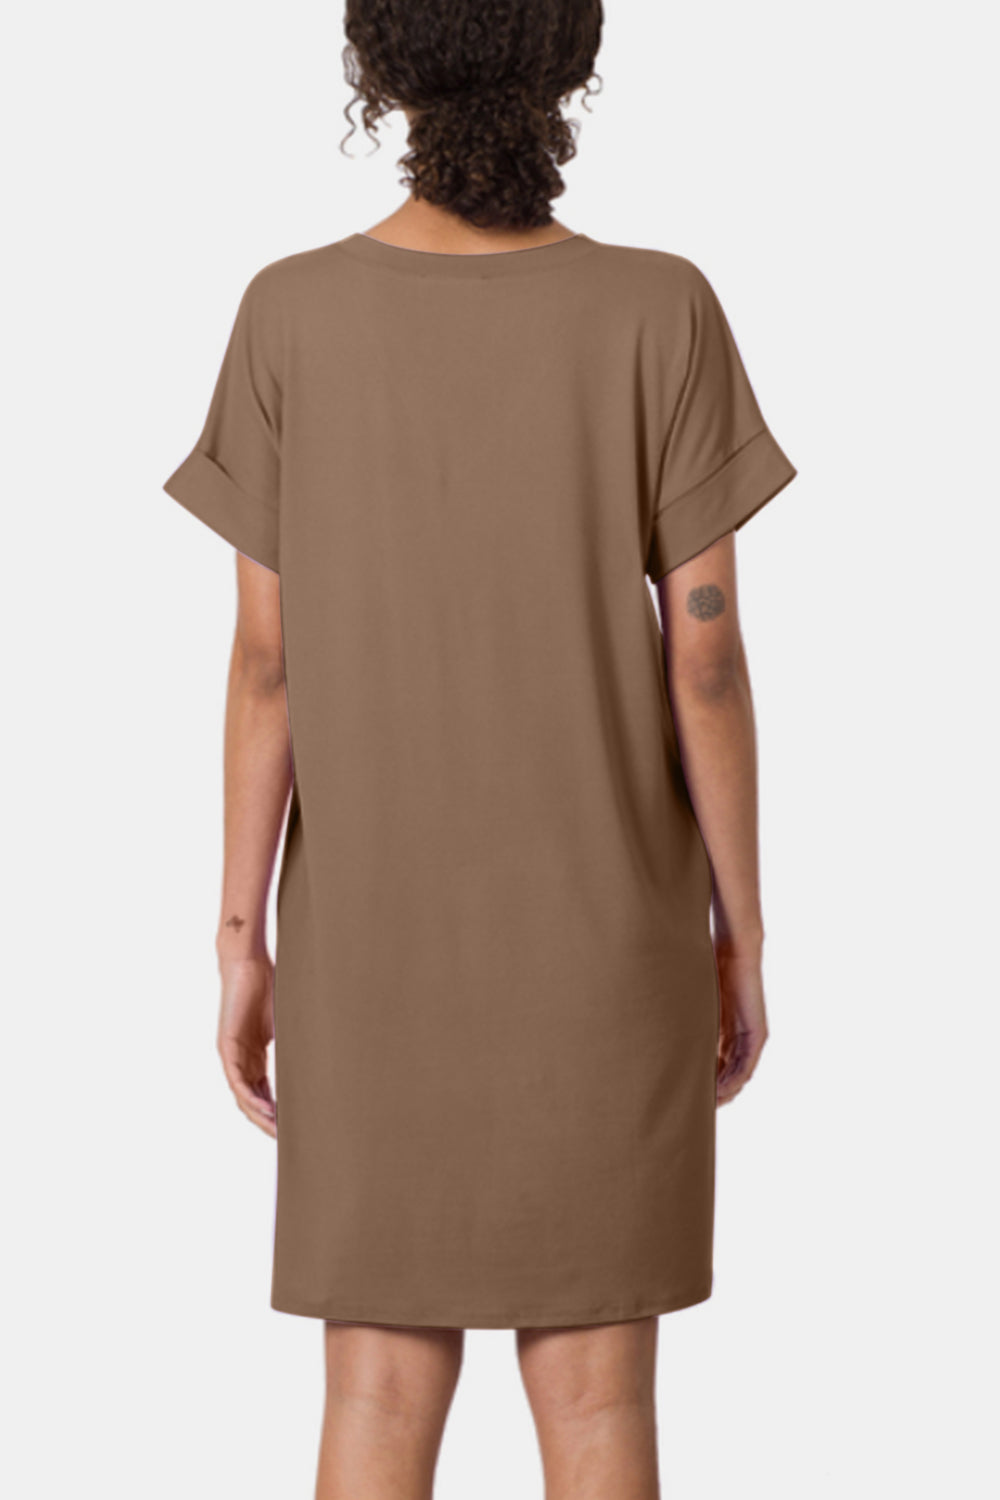 Adriana - Rolled Short Sleeve V-Neck Dress - Mocha - Exclusively Online